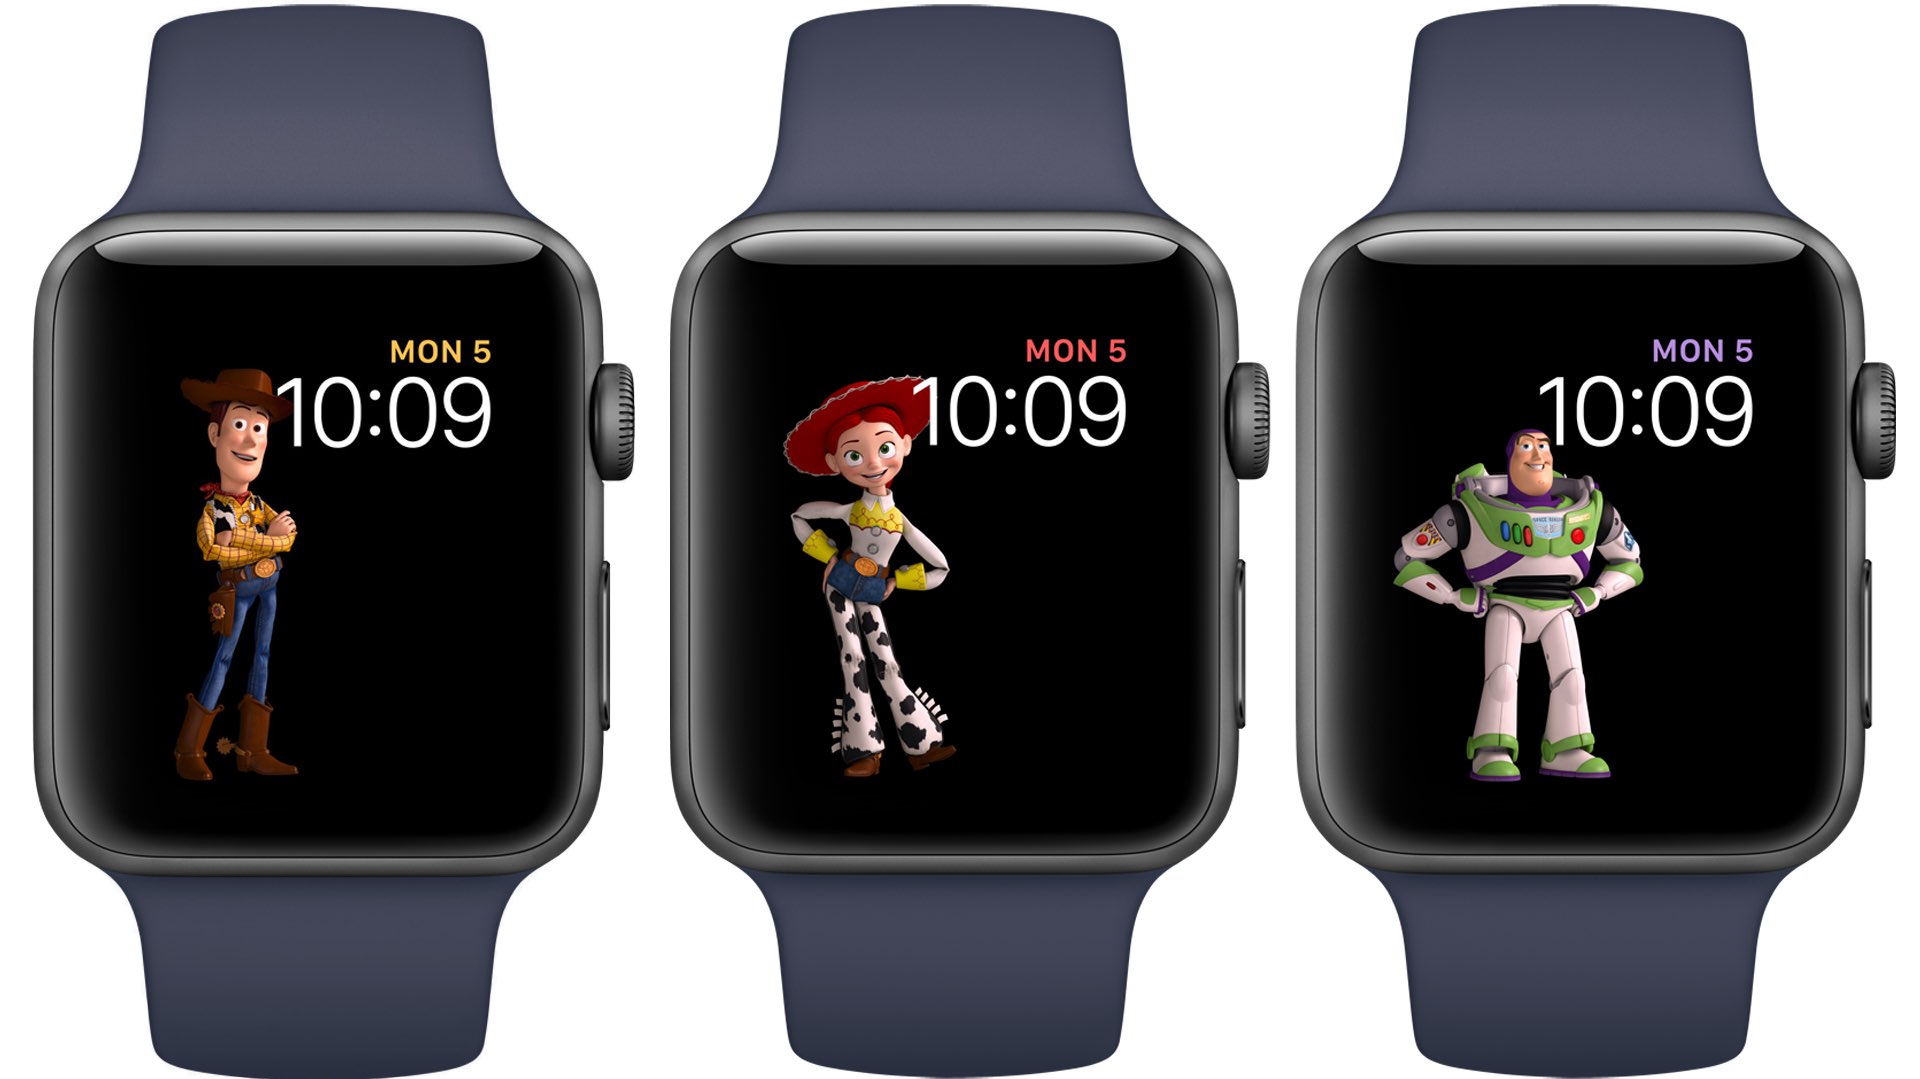 Apple released watchOS 4 beta 5 for developers